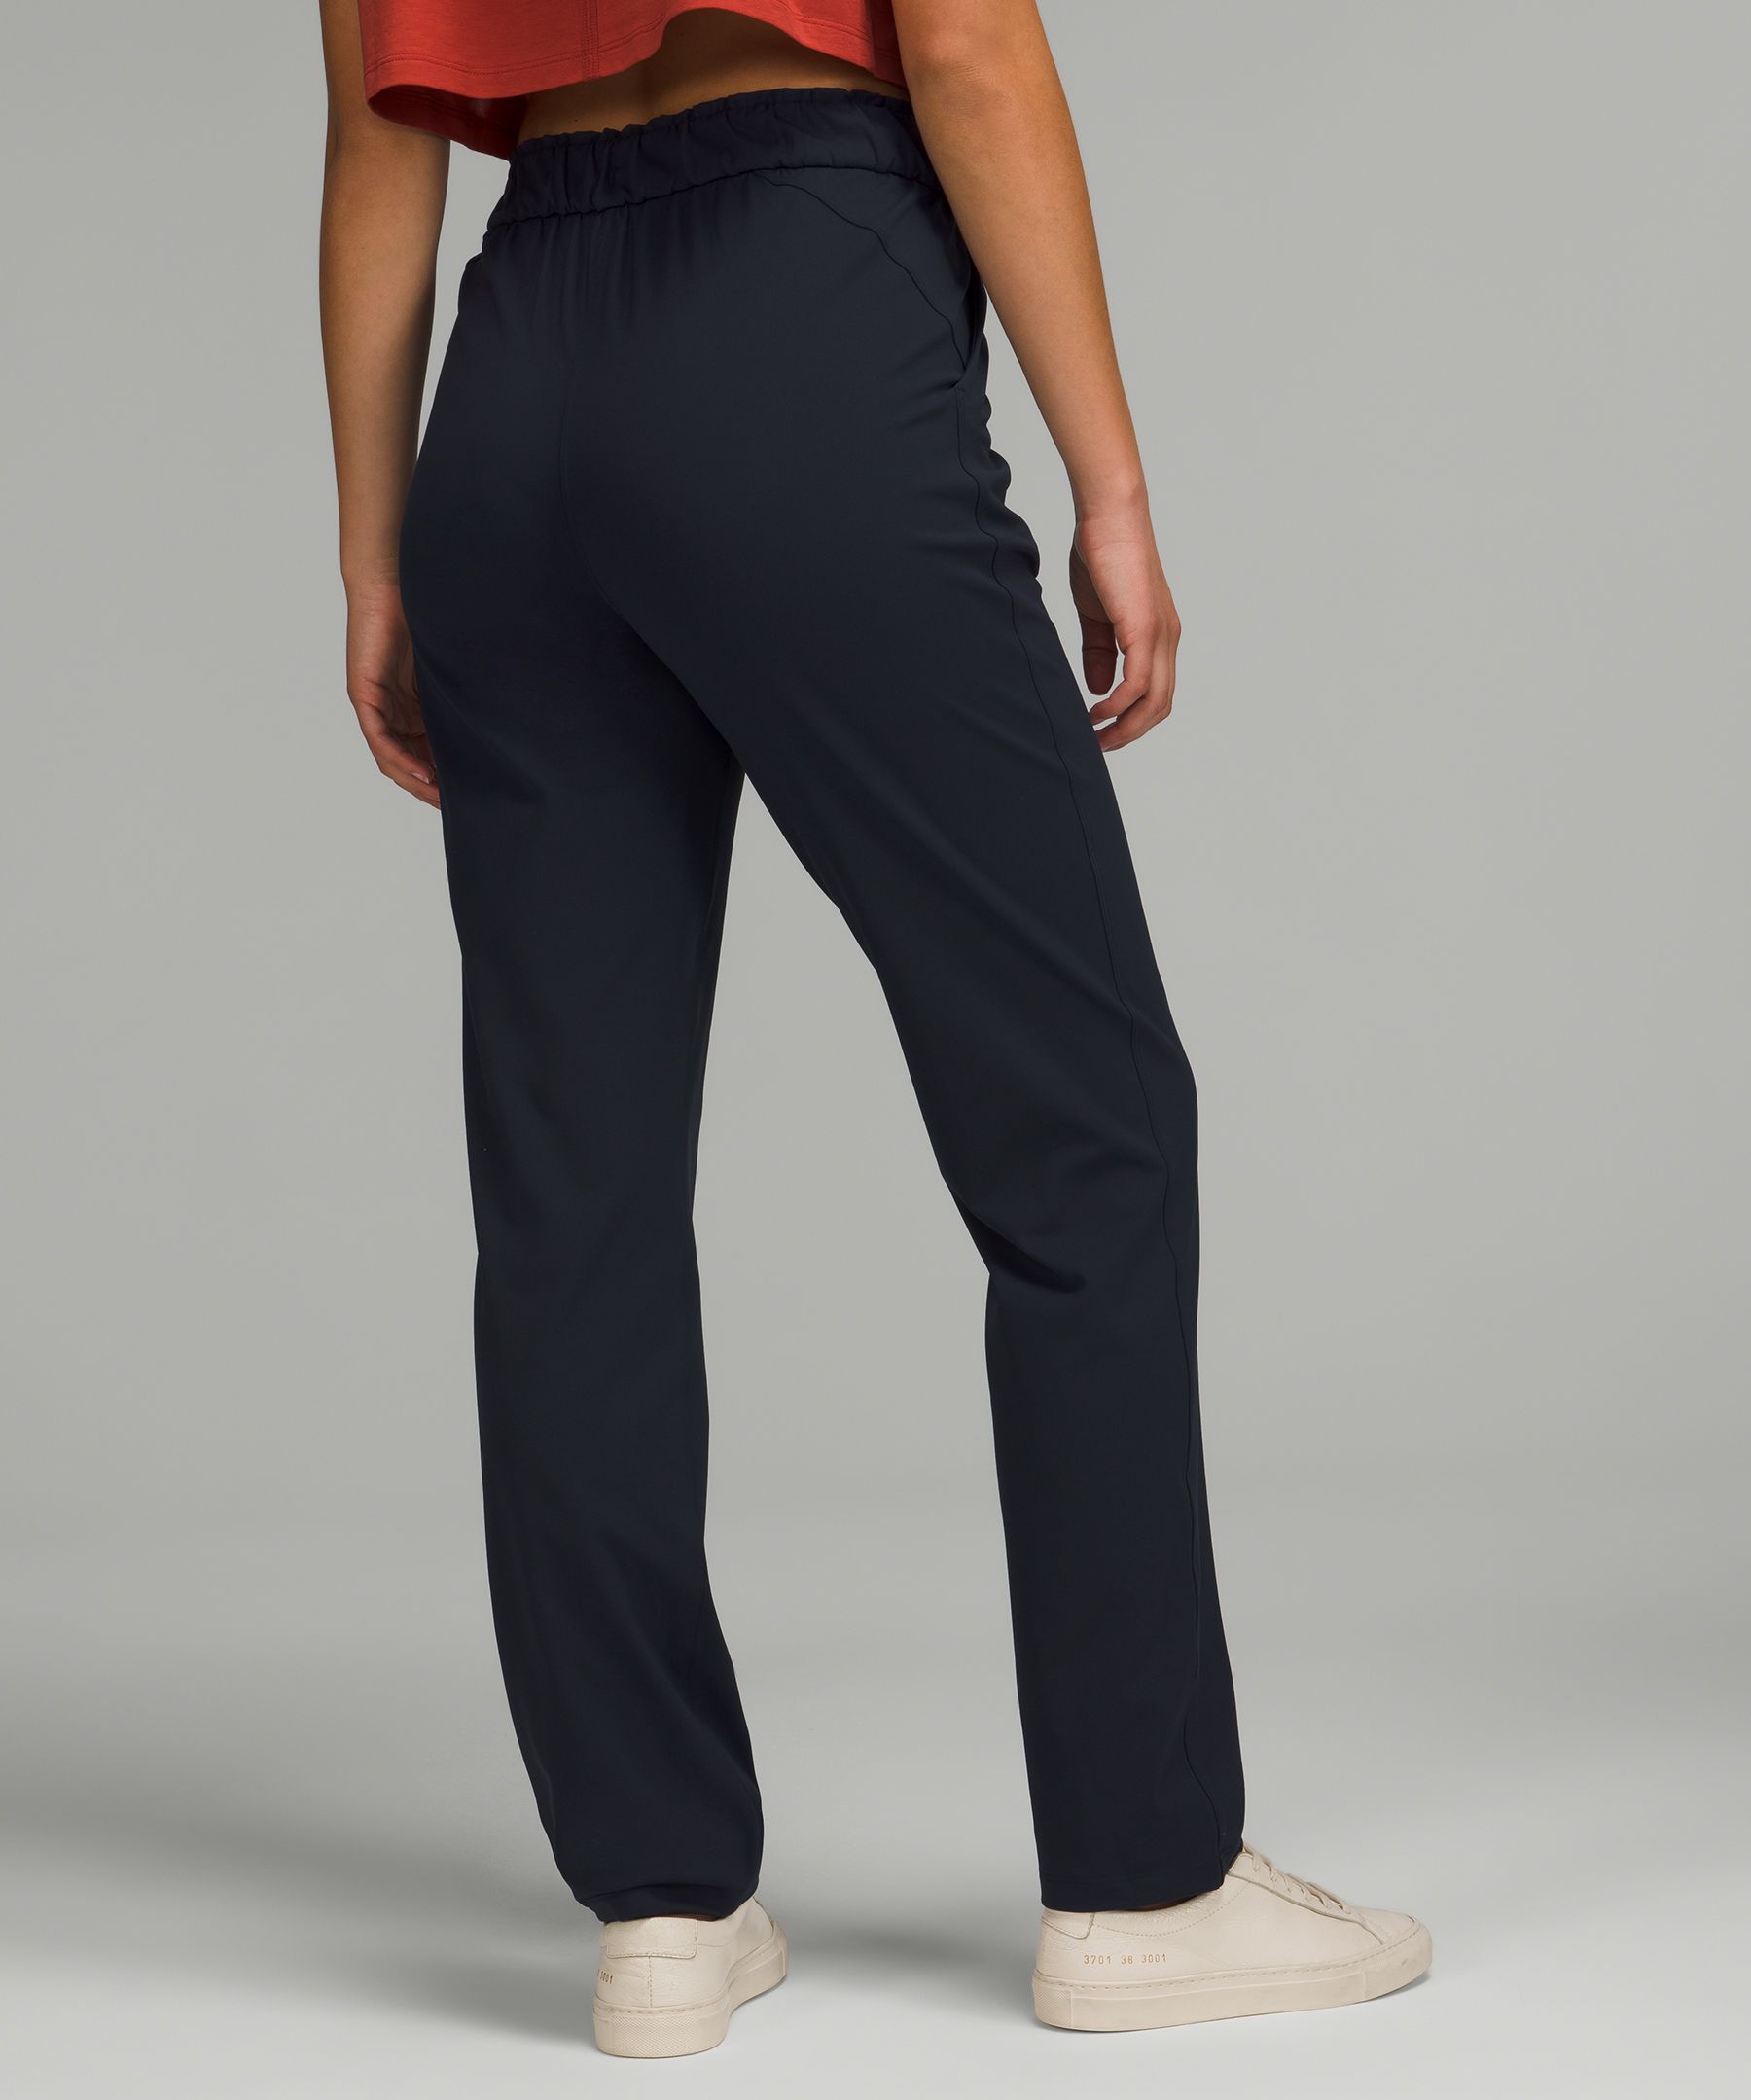 Stretch Luxtreme High-Rise Pant *Full Length | Women's Pants | lululemon